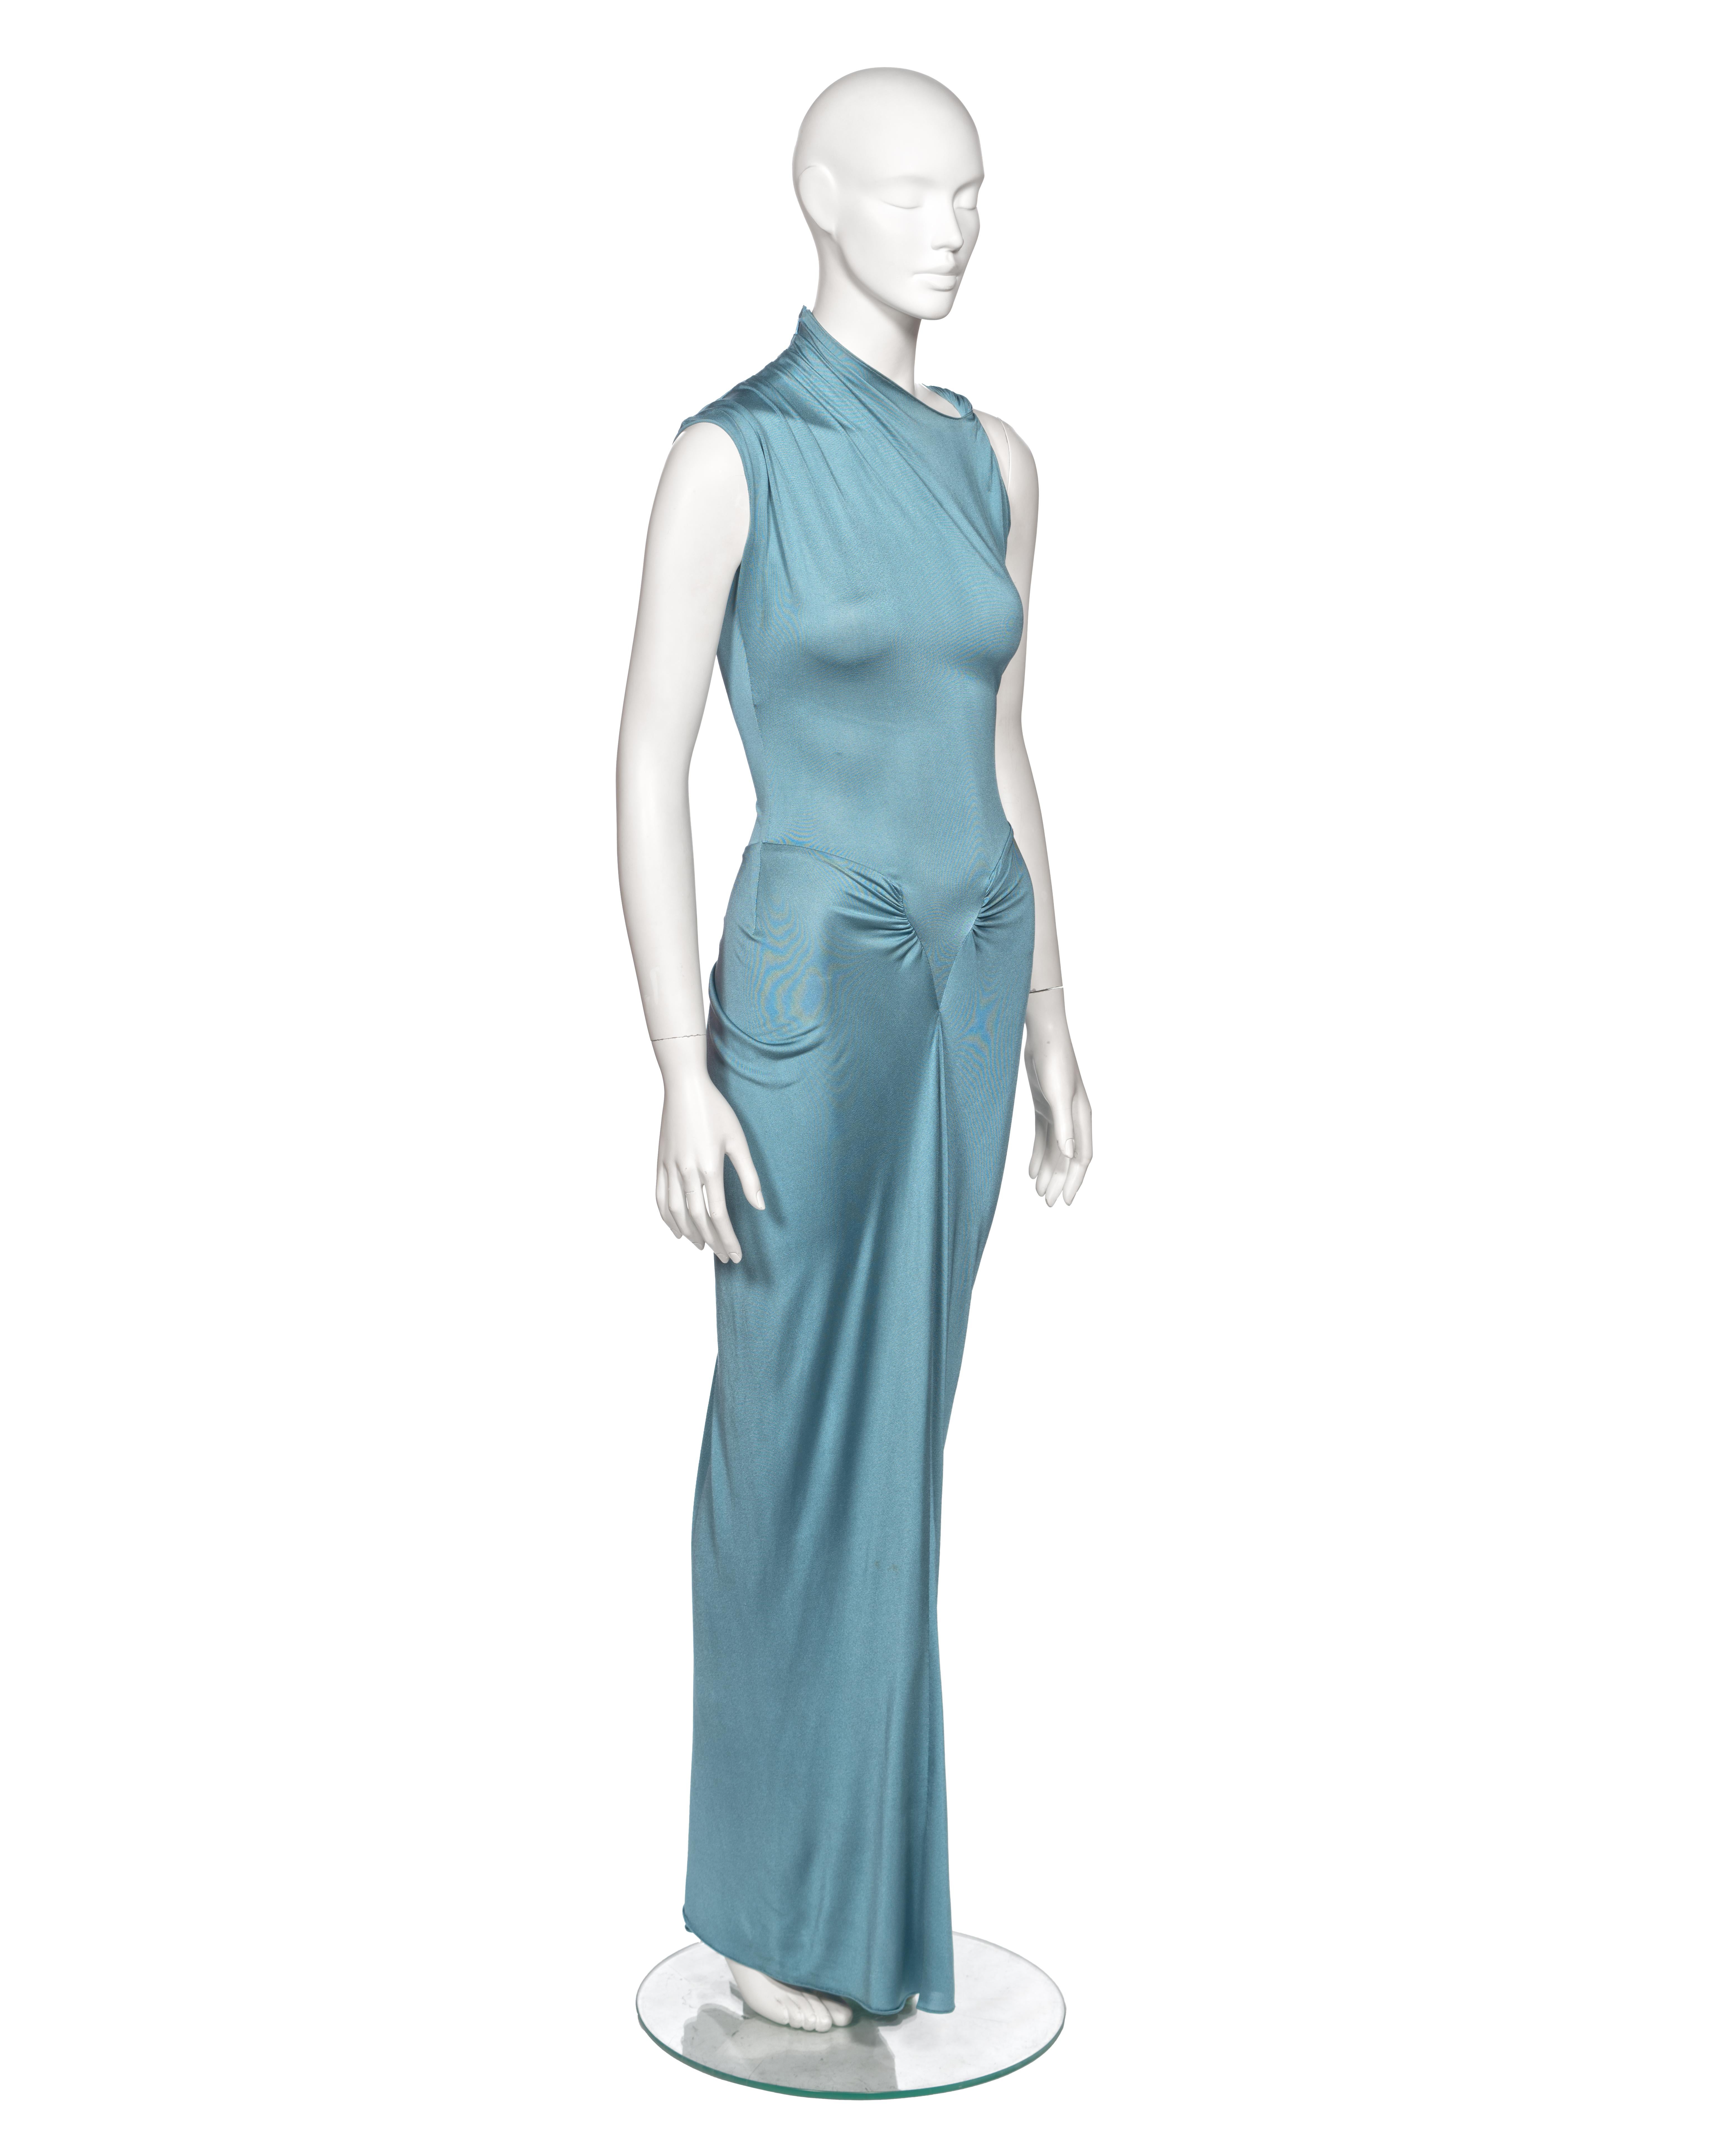 Women's Christian Dior by John Galliano Powder Blue Silk Jersey Evening Dress, ss 2000 For Sale